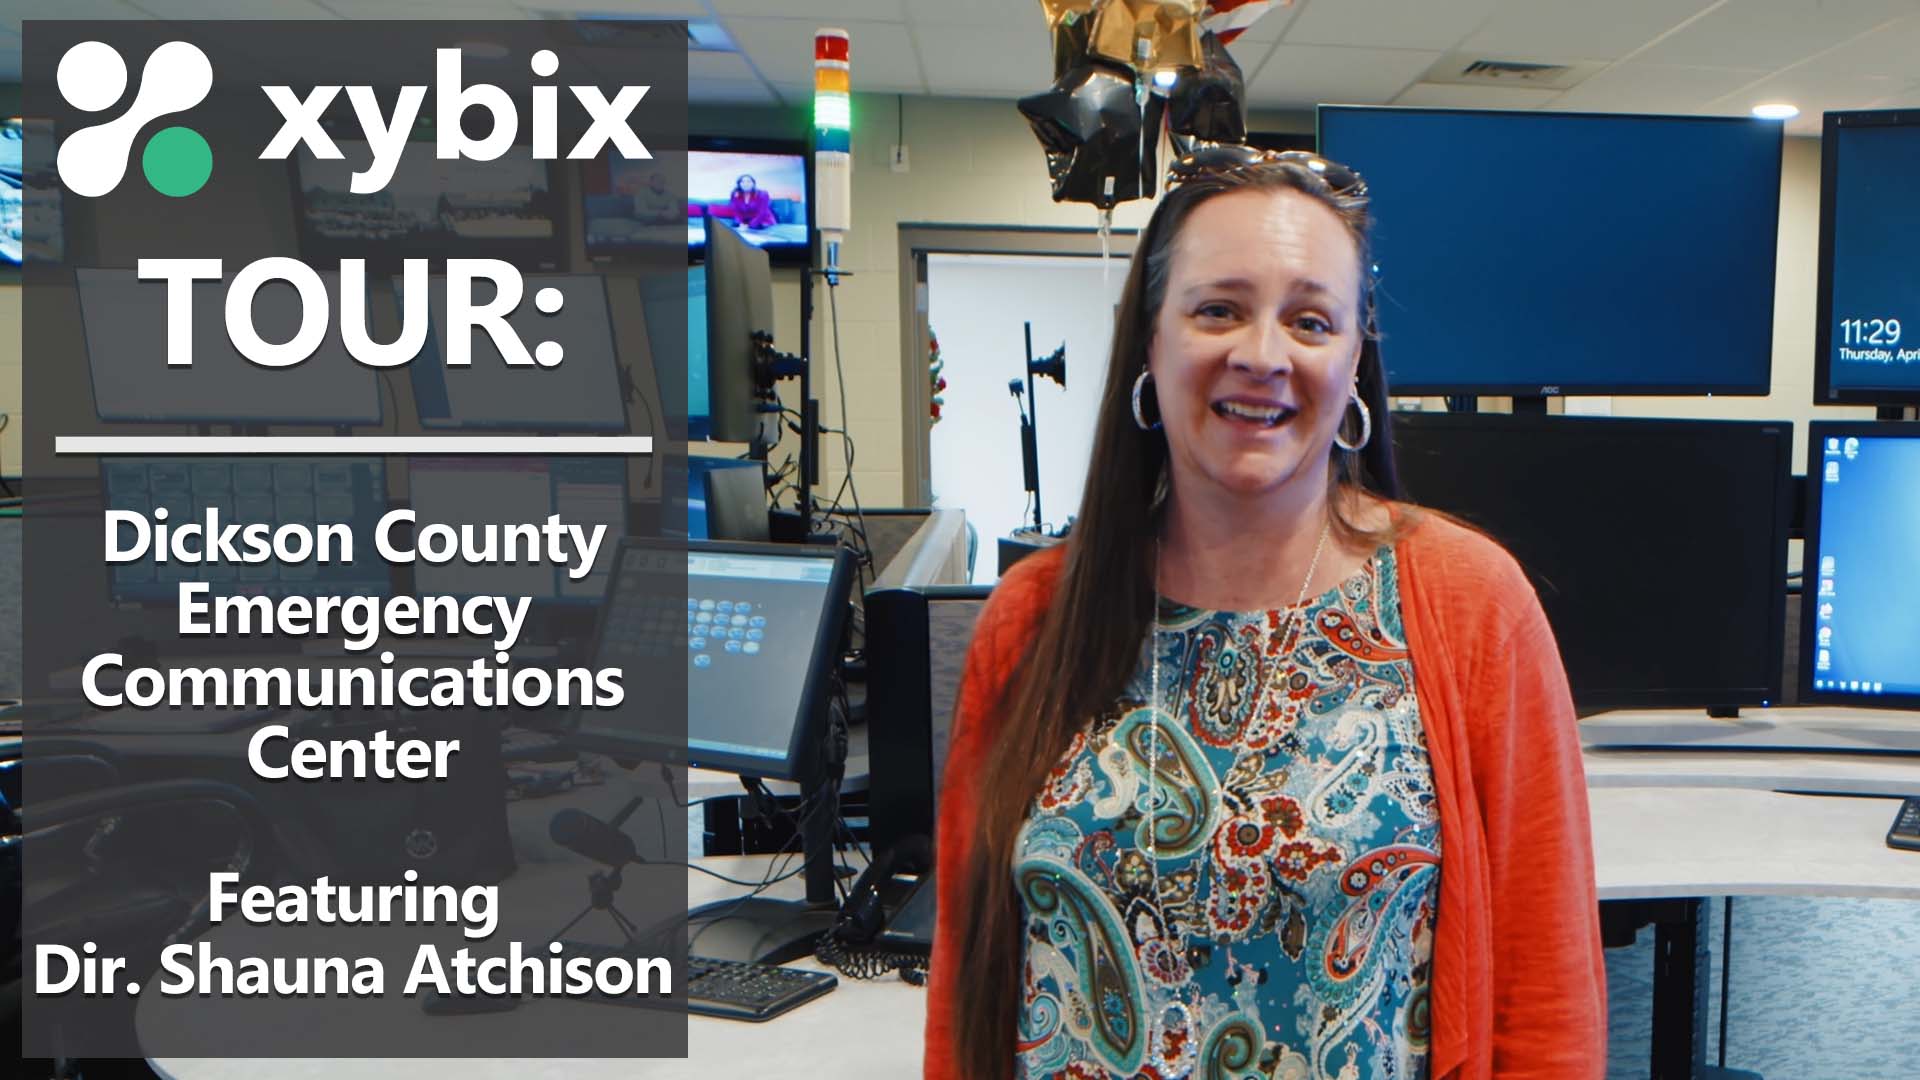 Xybix Tour of Dickson County Emergency Communications Center (TN) featuring Dir. Shauna Atchison